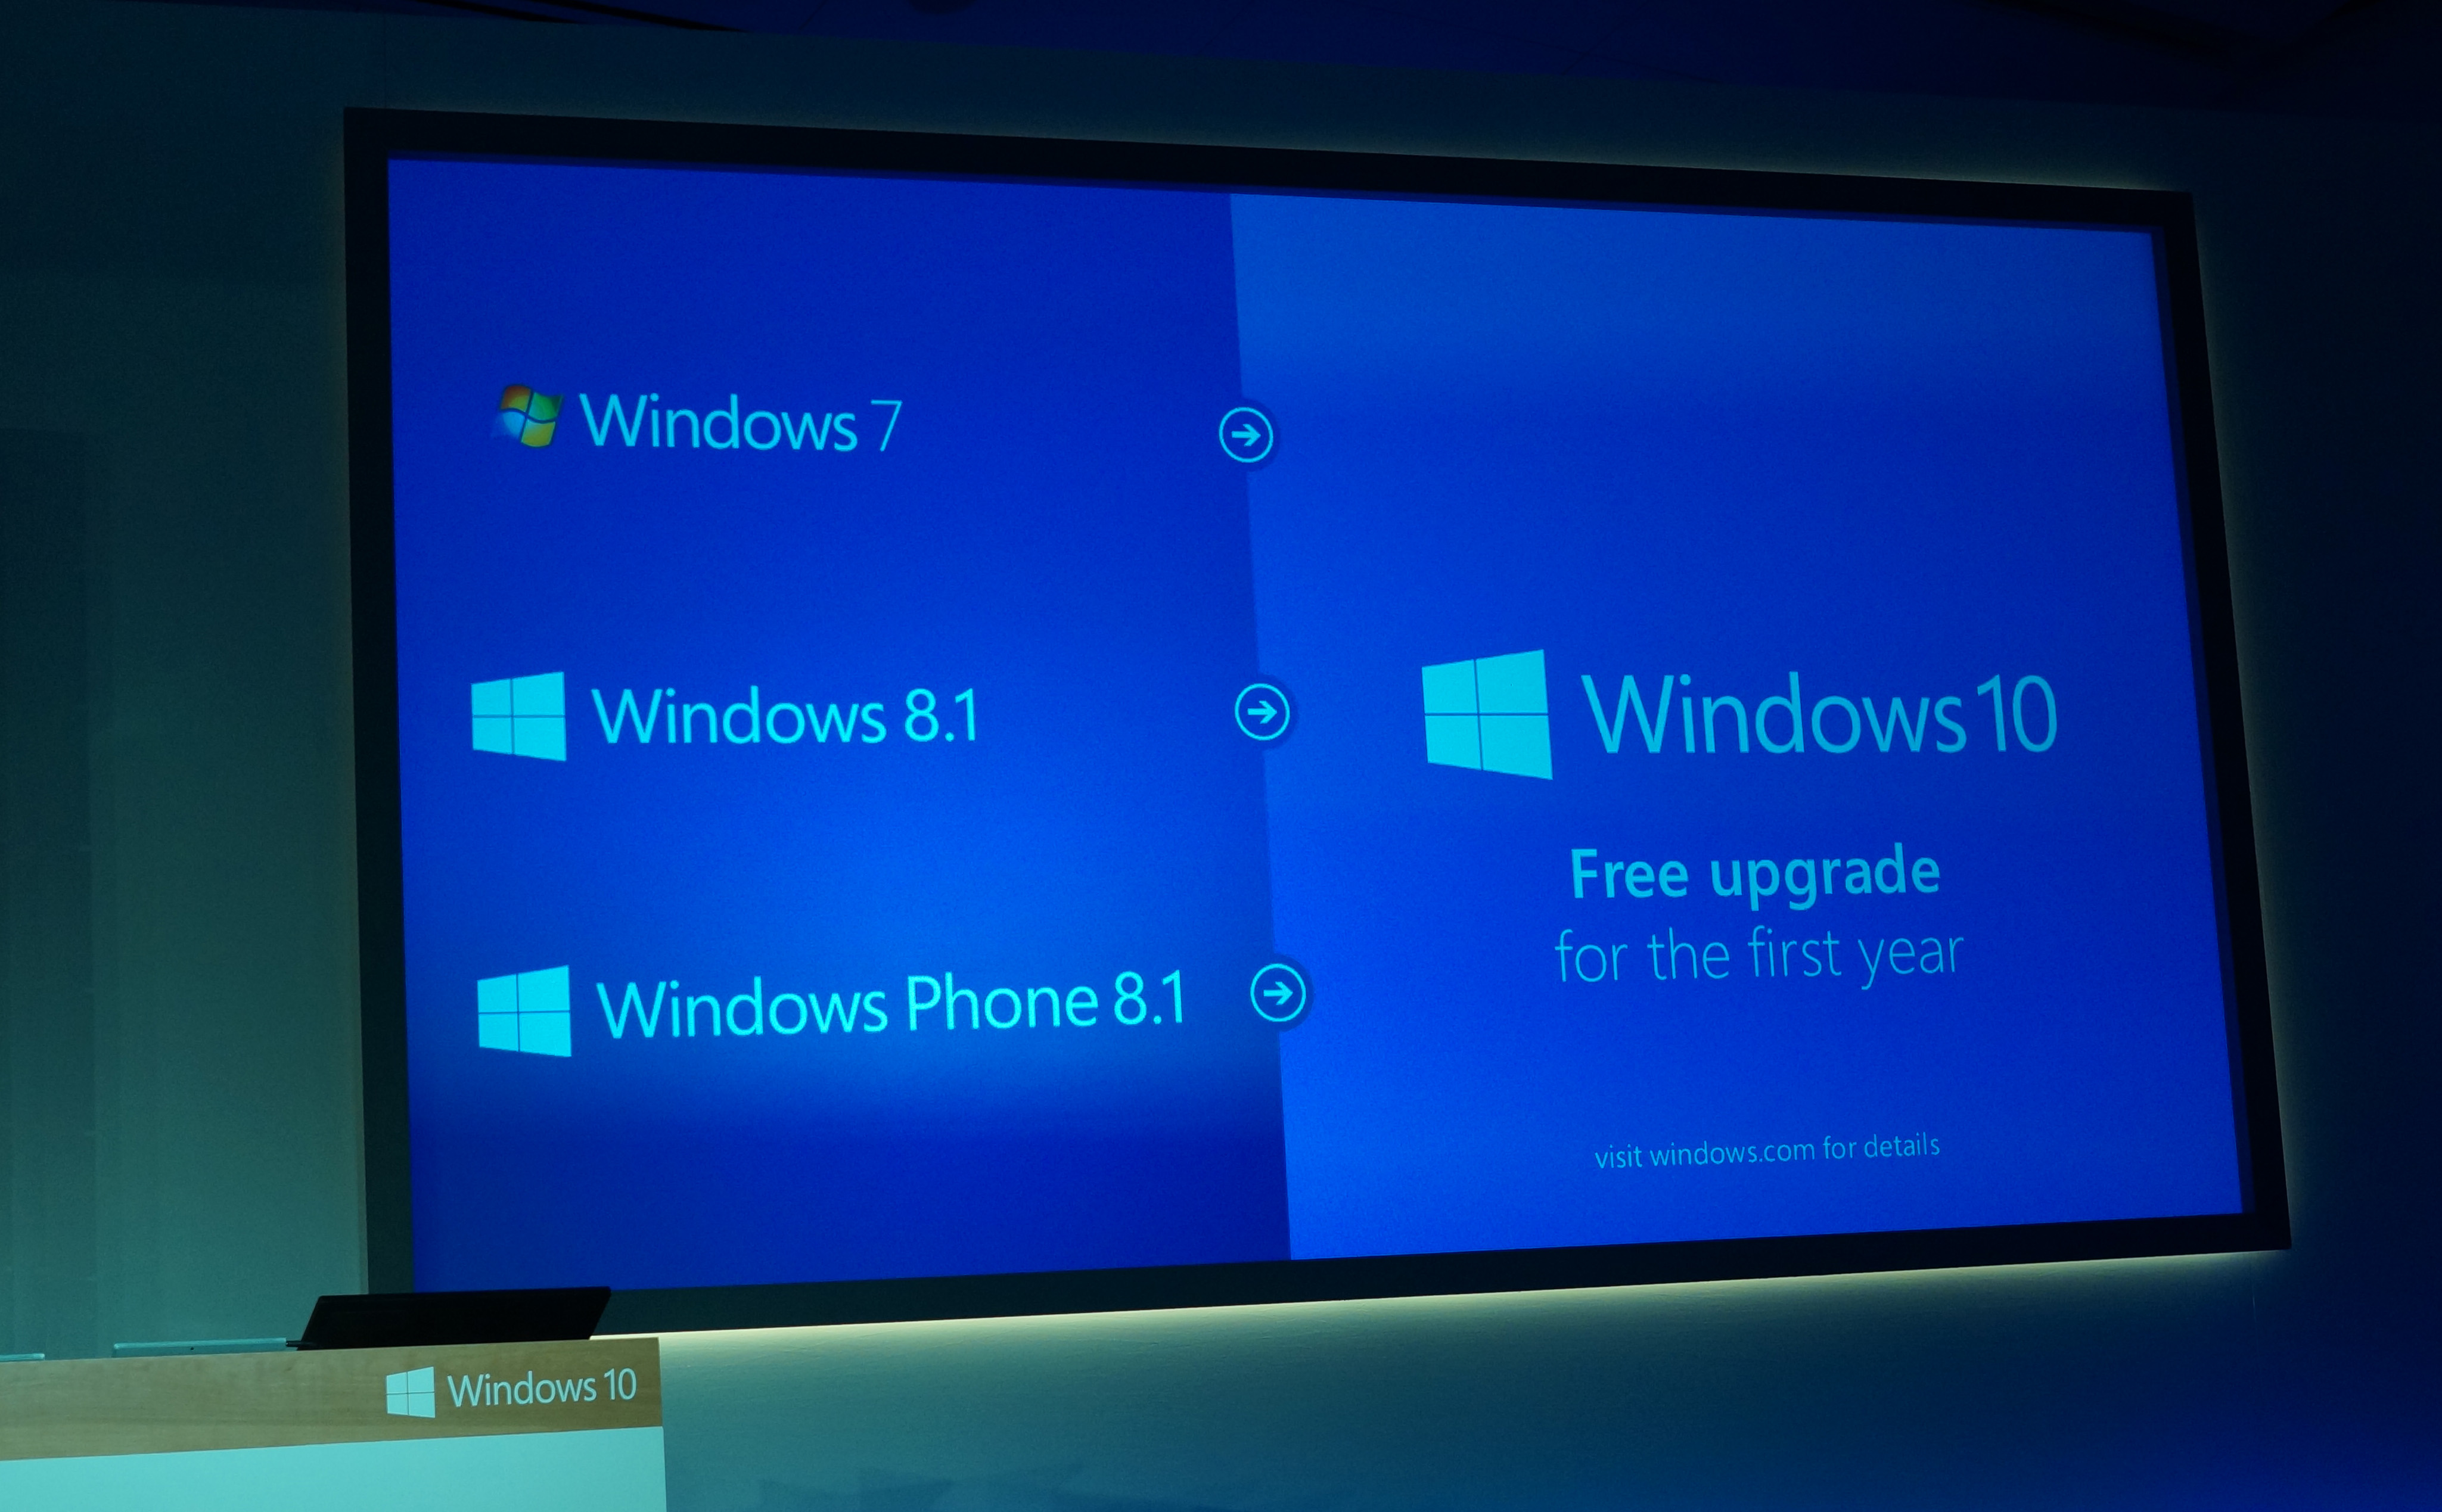 best free virtual machine for windows 7